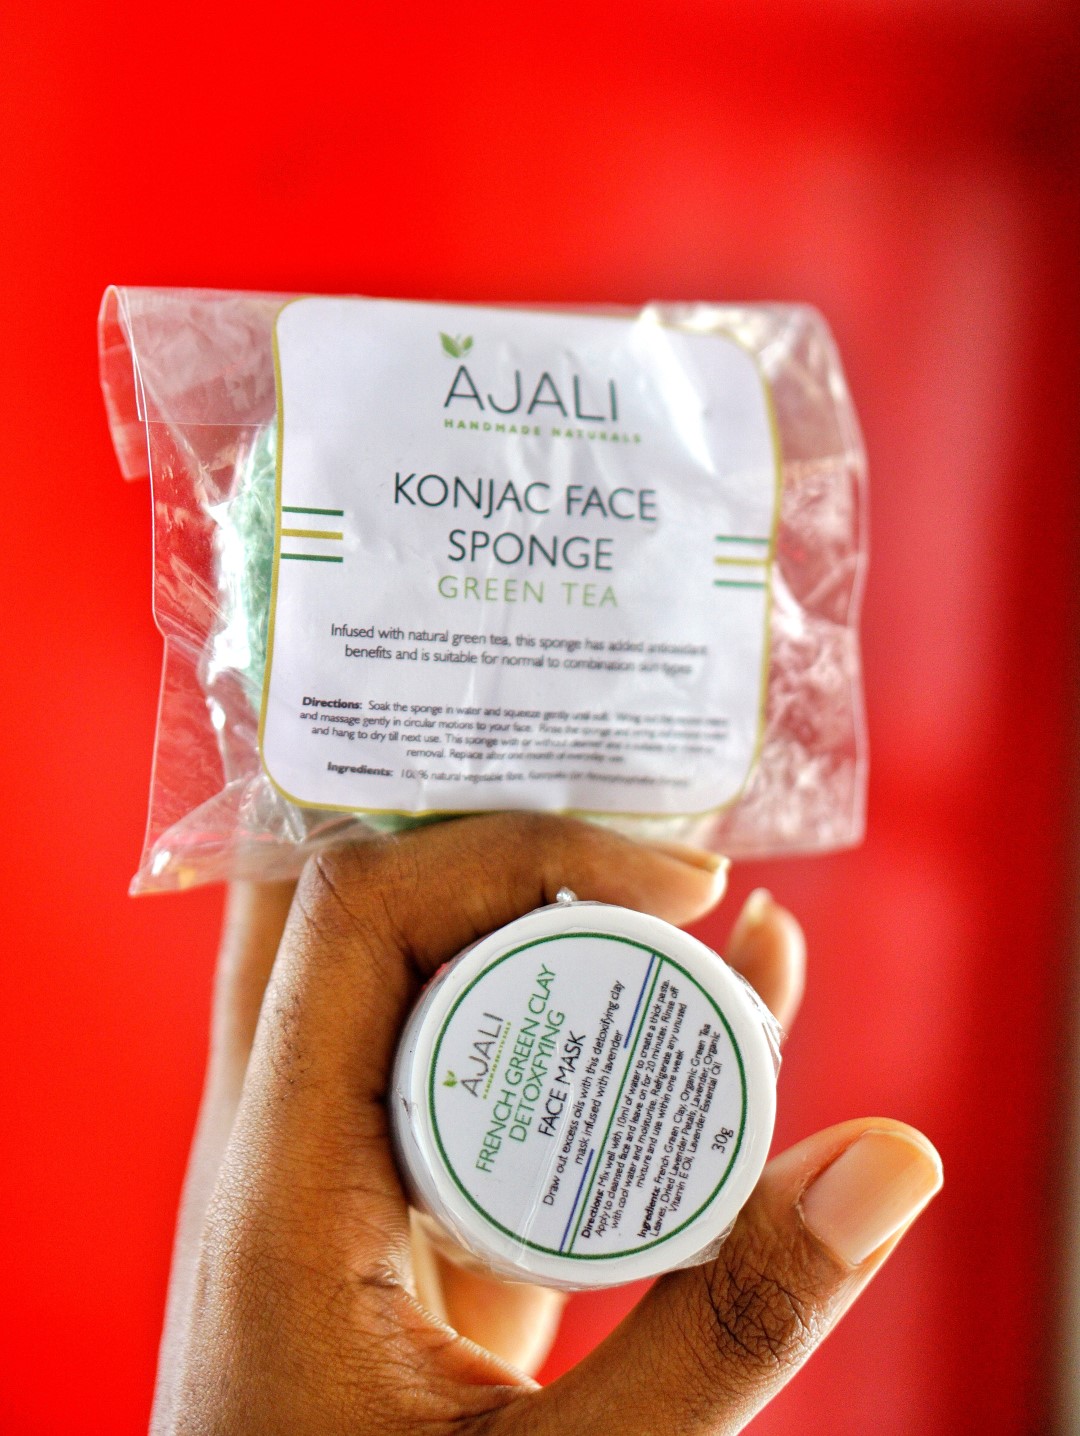 Ajali naturals konjac face sponge and green tea detox face mask